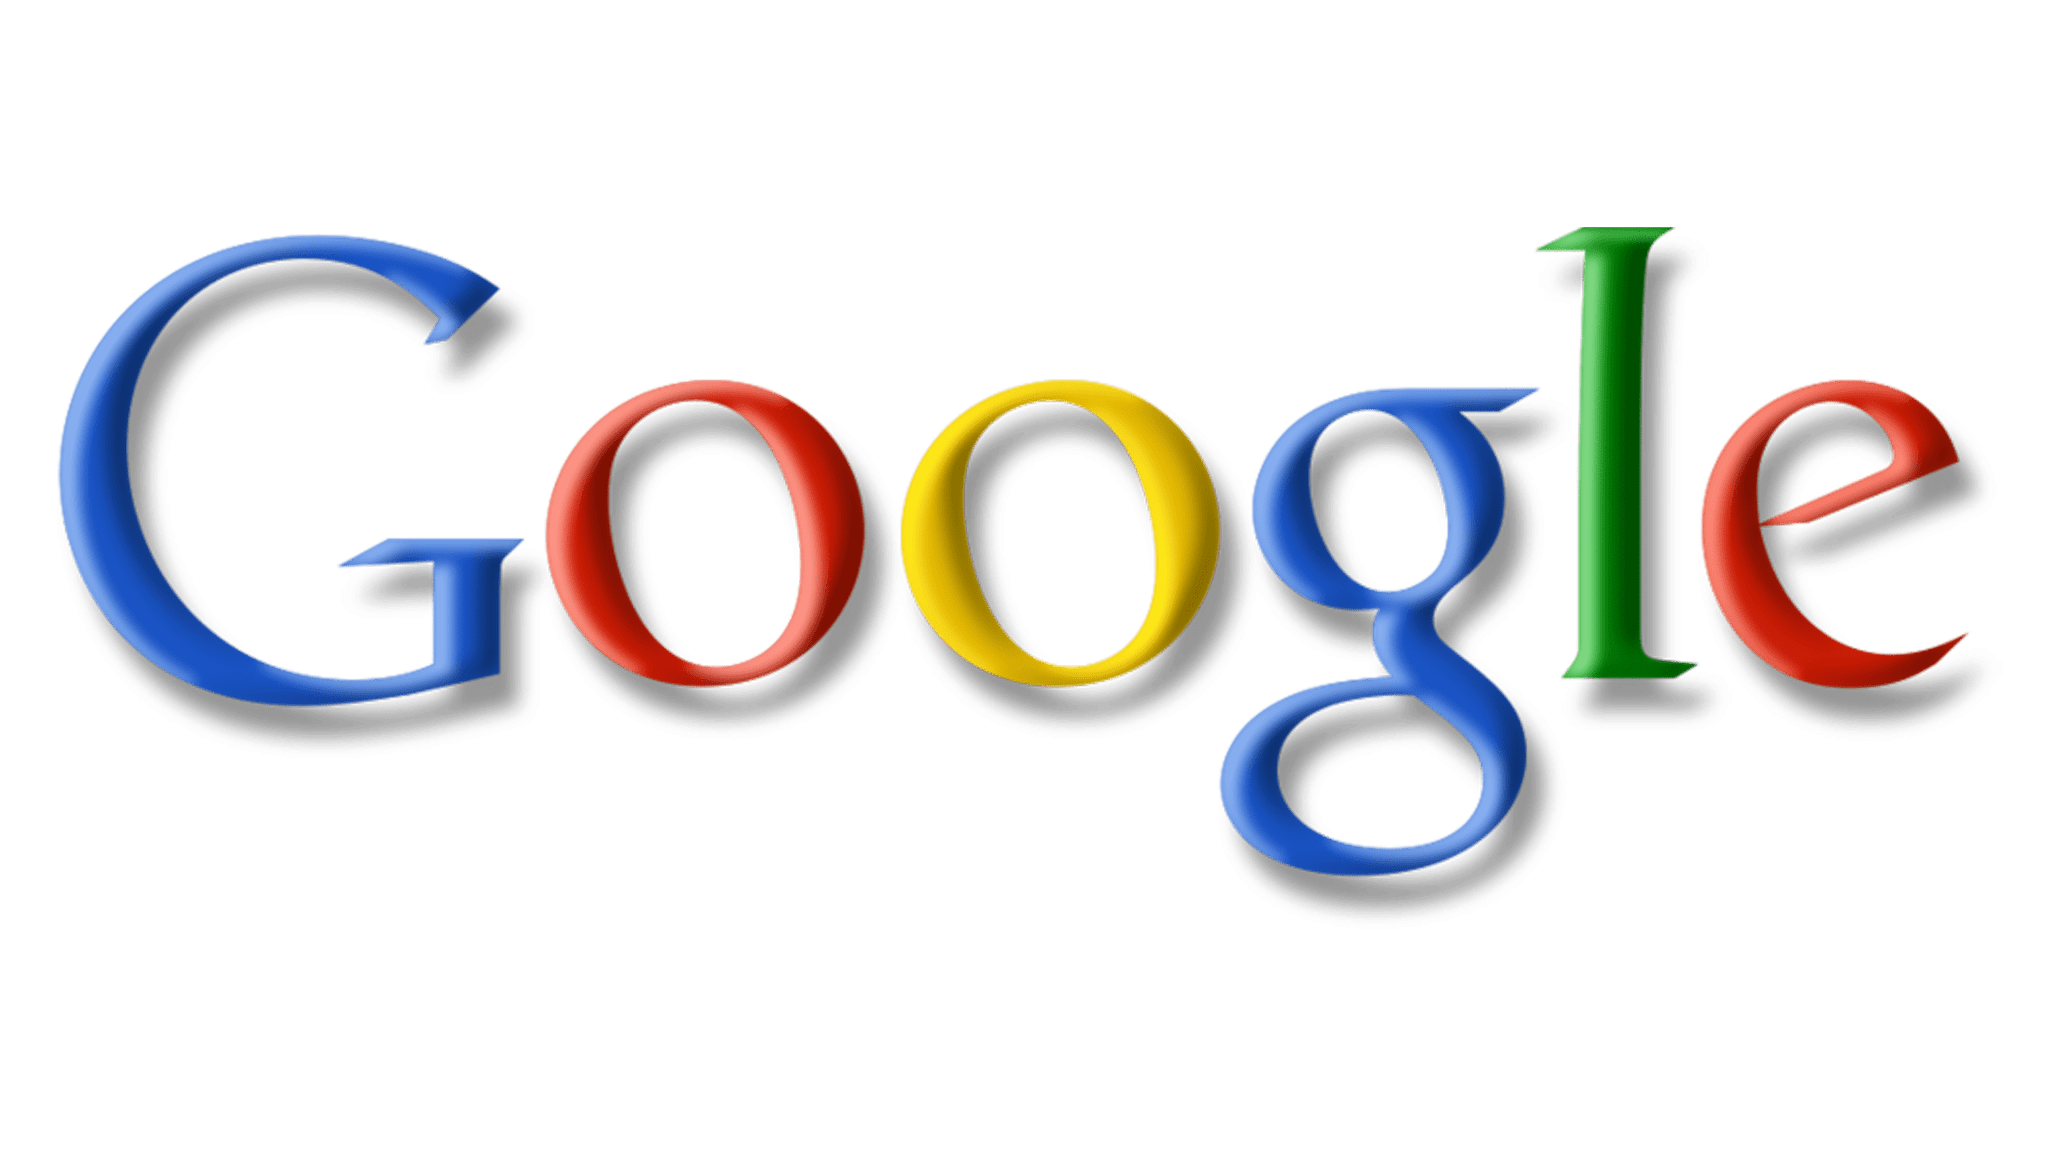 Https blog google. Гугл. Гугл лого. Гугл картинки. Гугл фото эмблема.